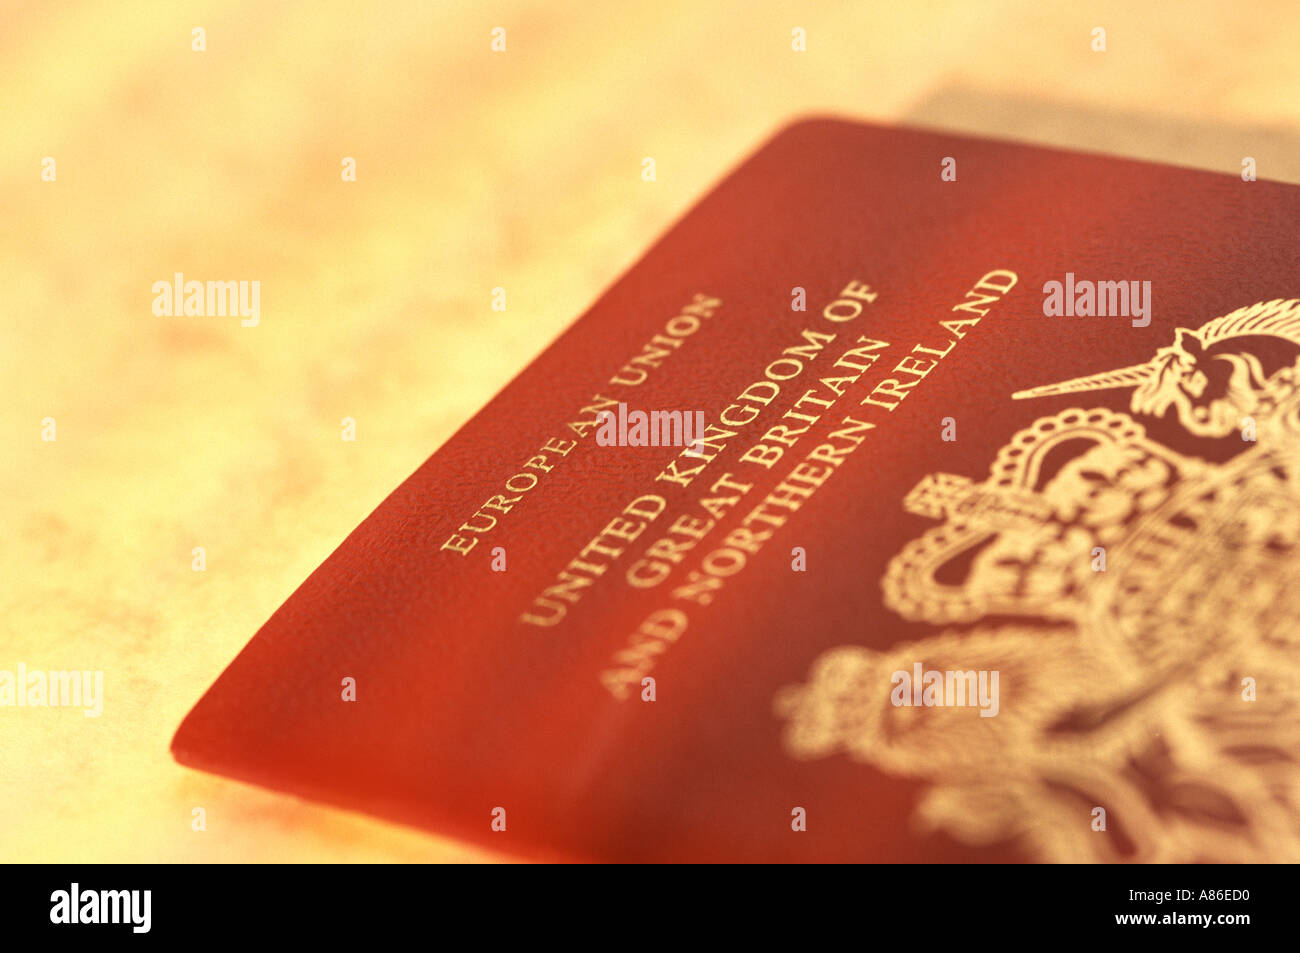 British European Union passport Stock Photo